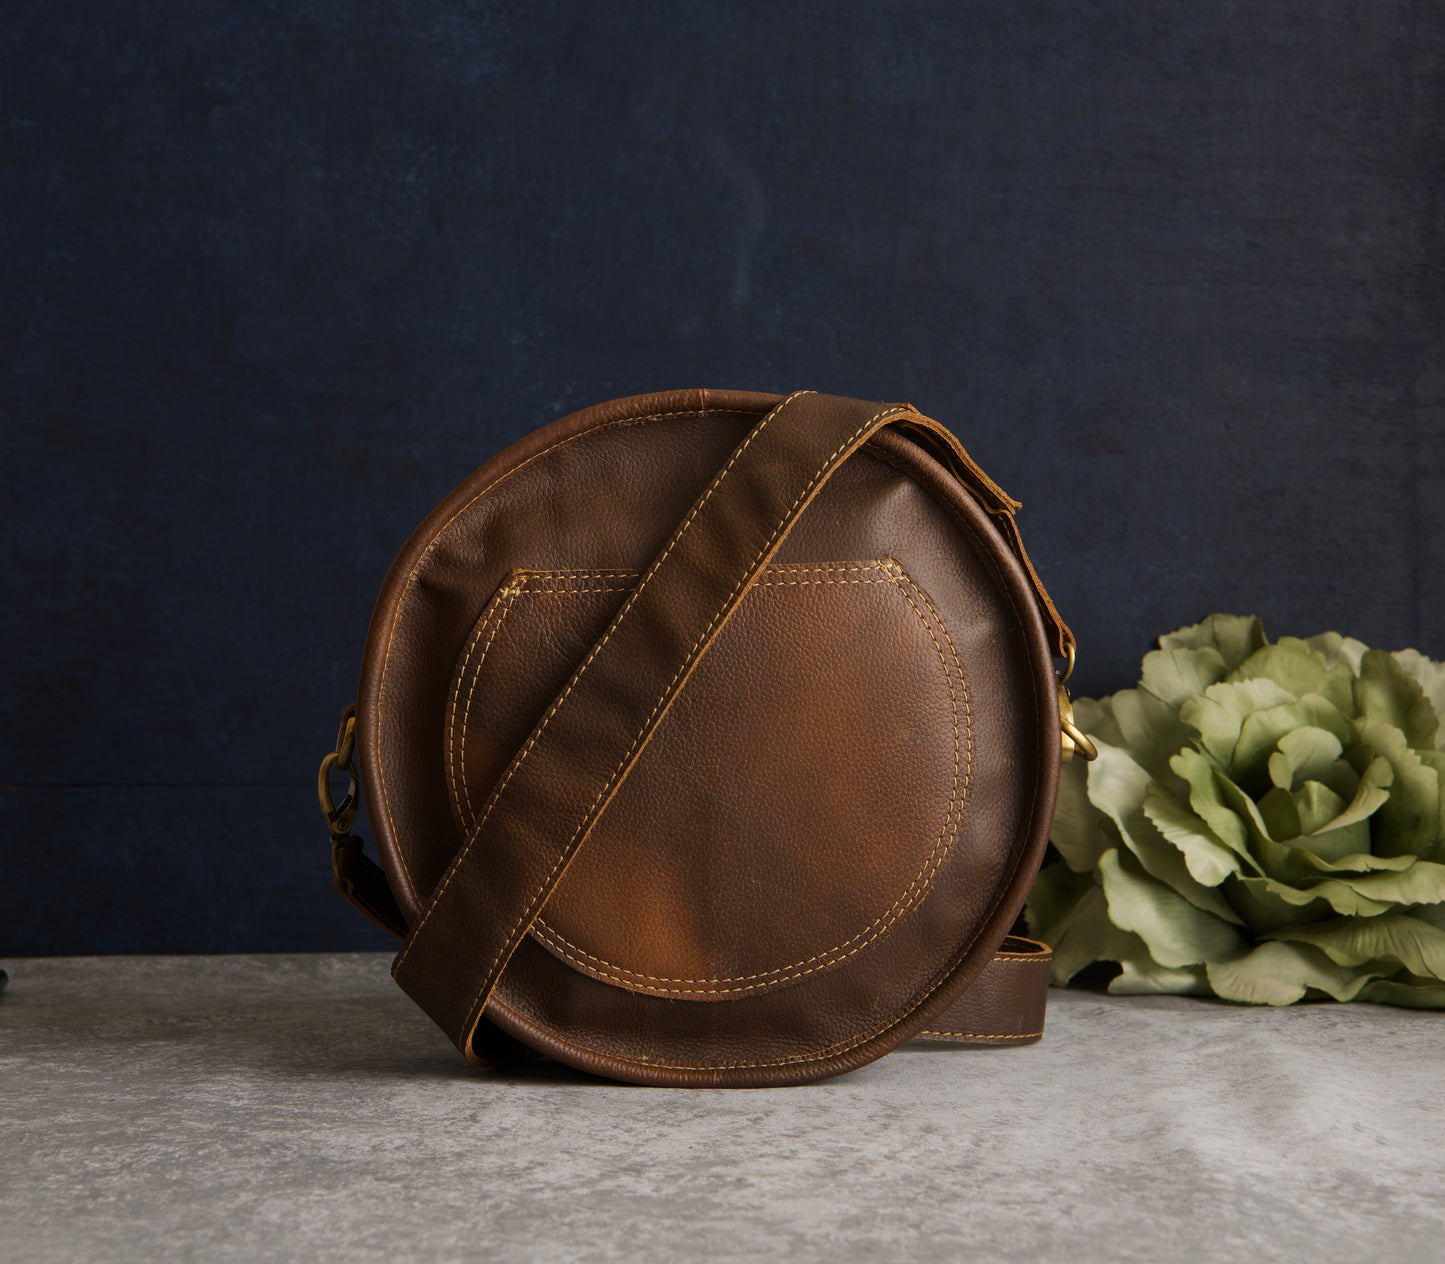 Femme Handpainted Rustic Leather Bag